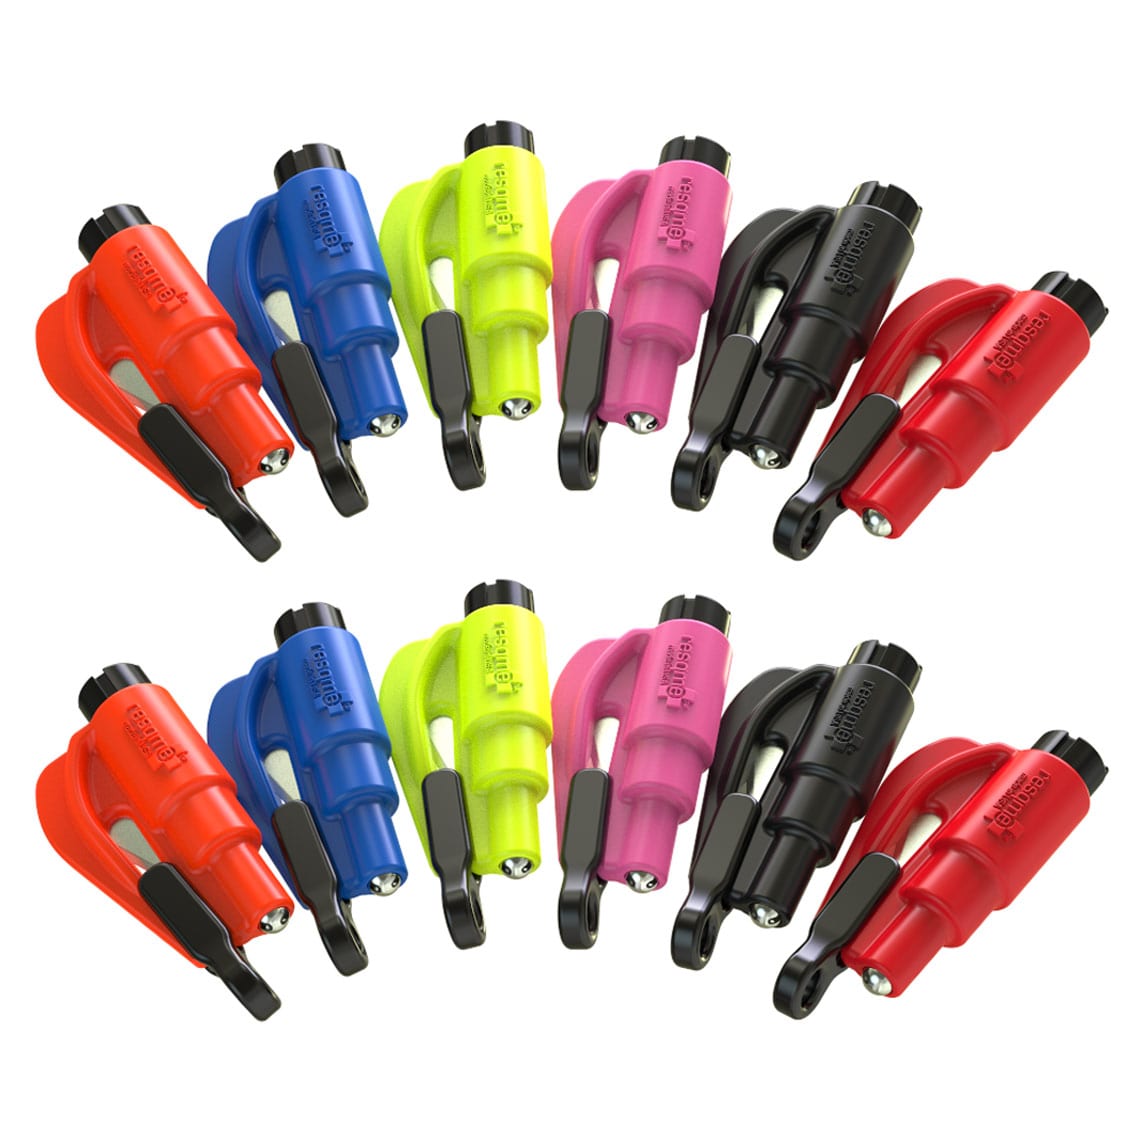 resqme® Car Escape Tool, Seatbelt Cutter / Window Breaker – Family Pack 12  multicolor units - resqme, Inc.